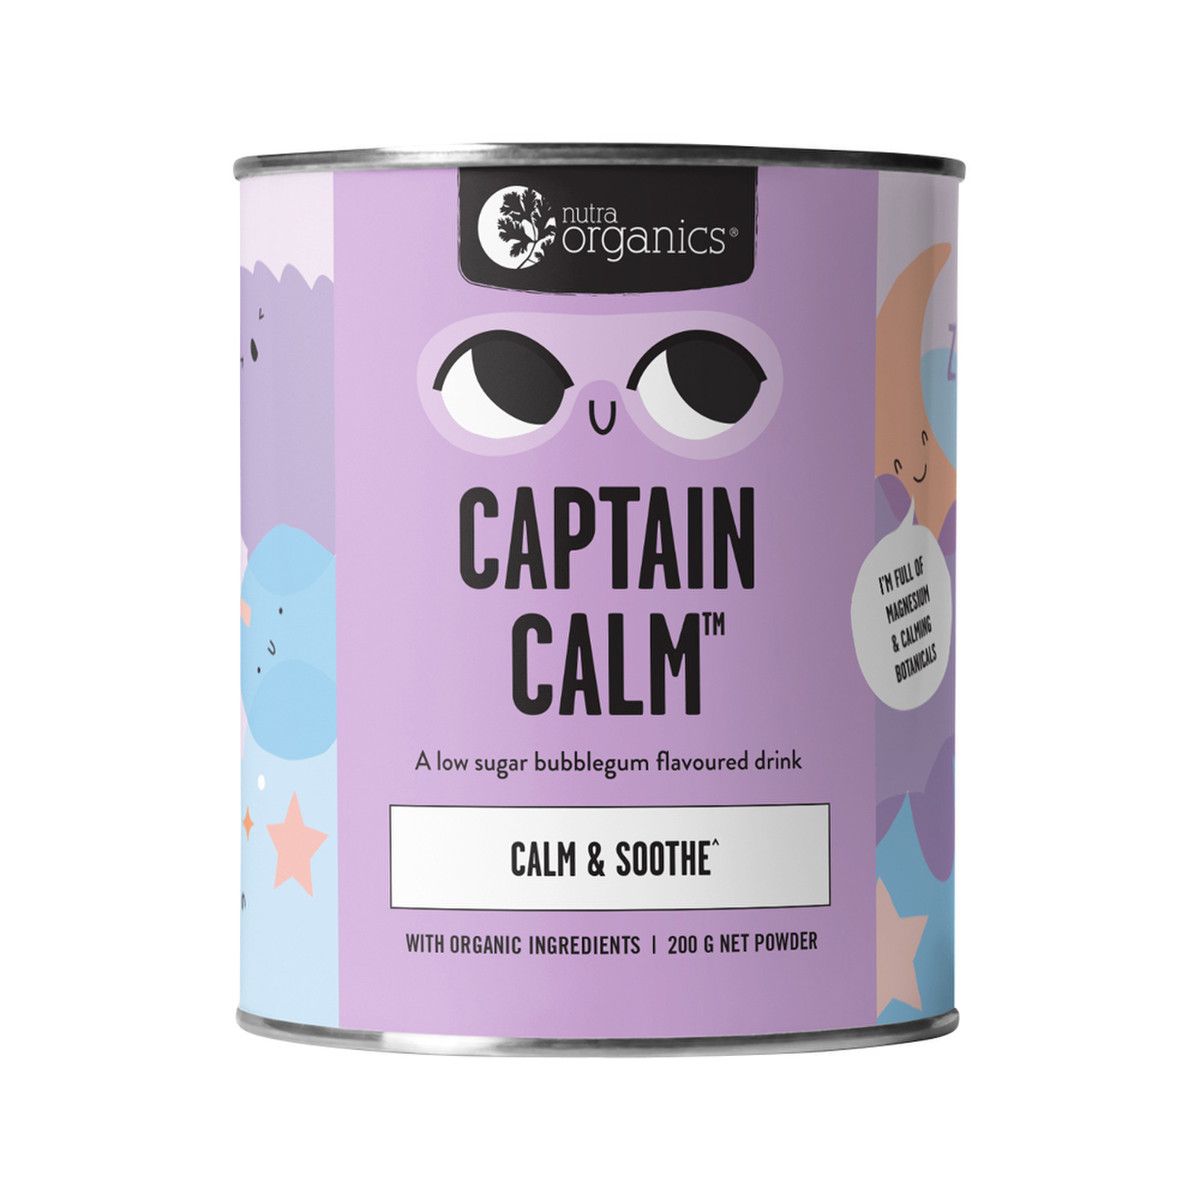 NUTRA ORGANICS - Captain Calm (Calm & Soothe) Bubblegum 200g